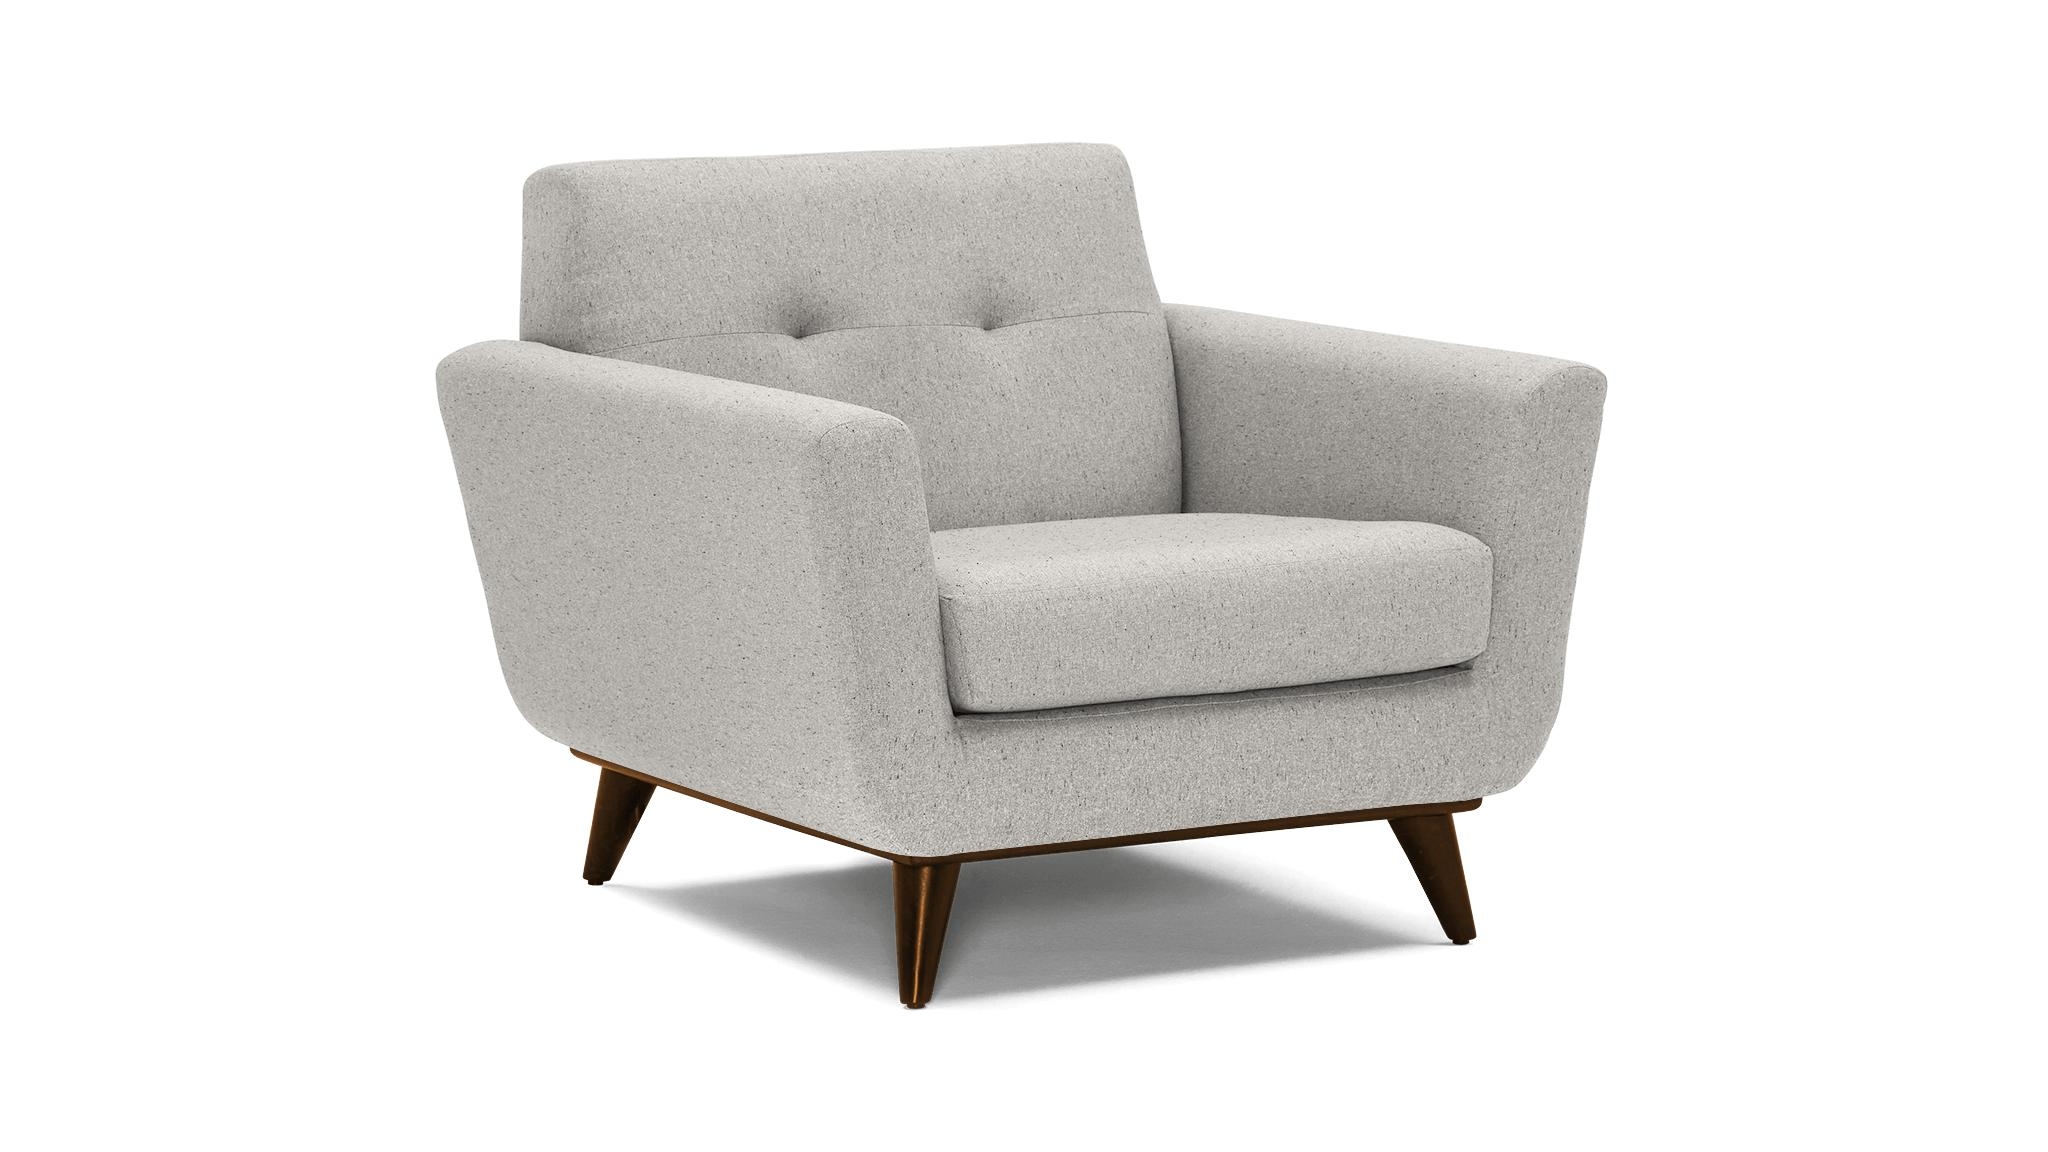 White Hughes Mid Century Modern Chair - Tussah Snow - Mocha - Image 1